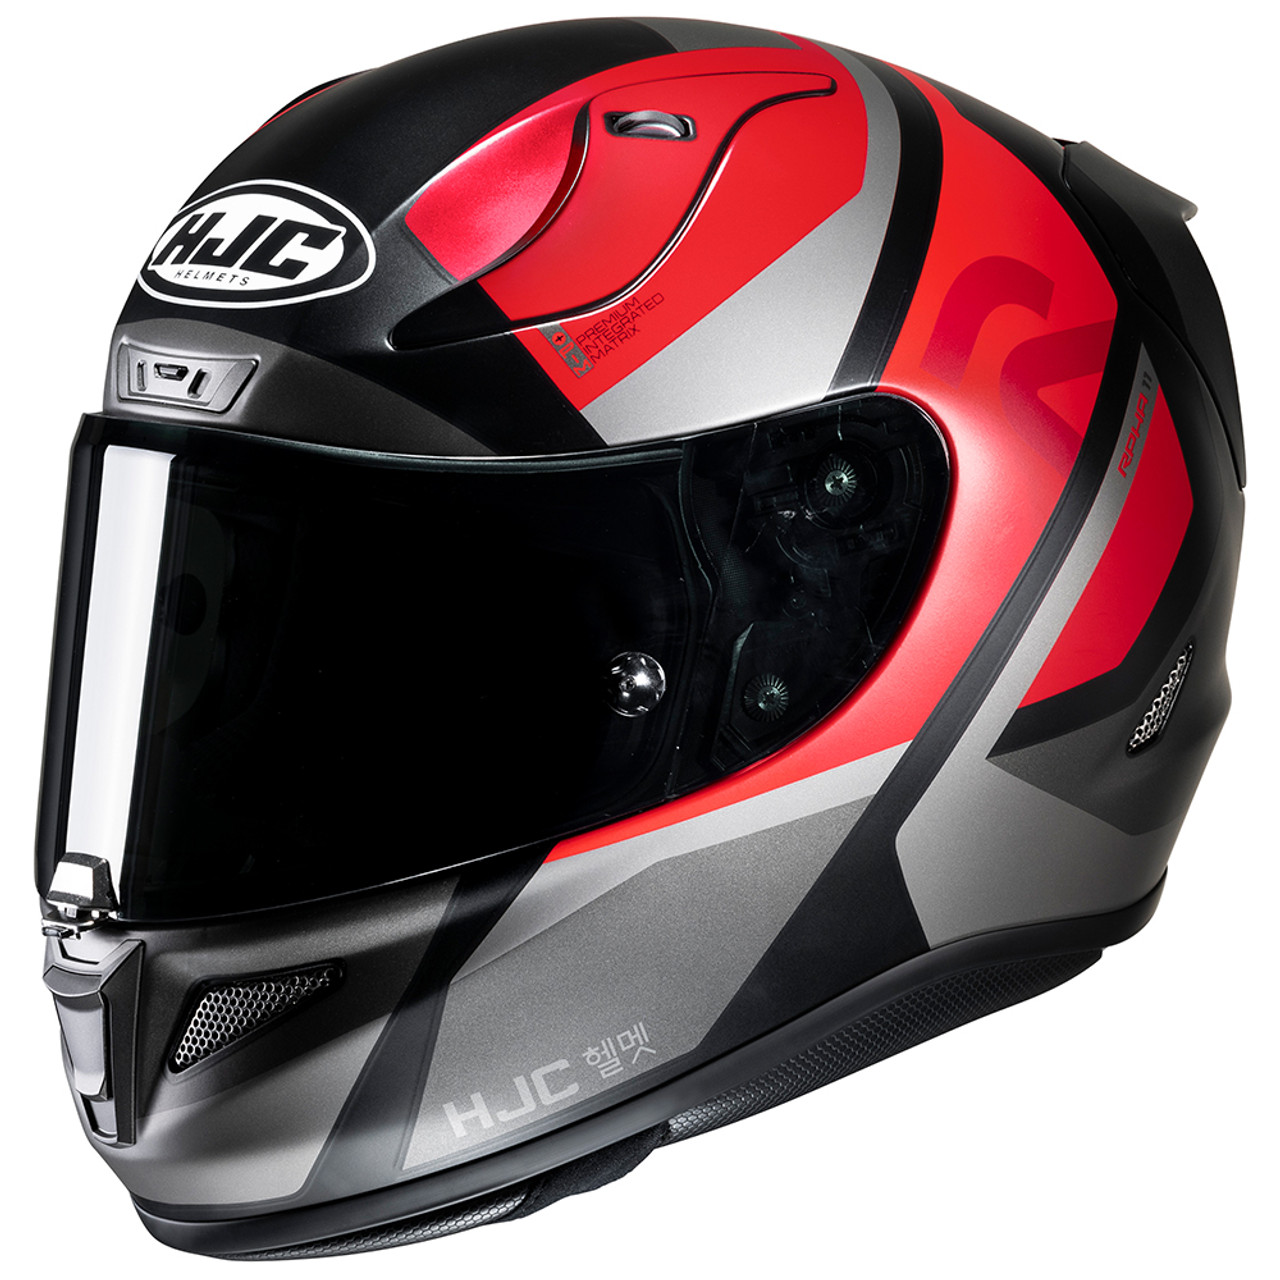 HJC RPHA 11 Helmet Review and Alternatives